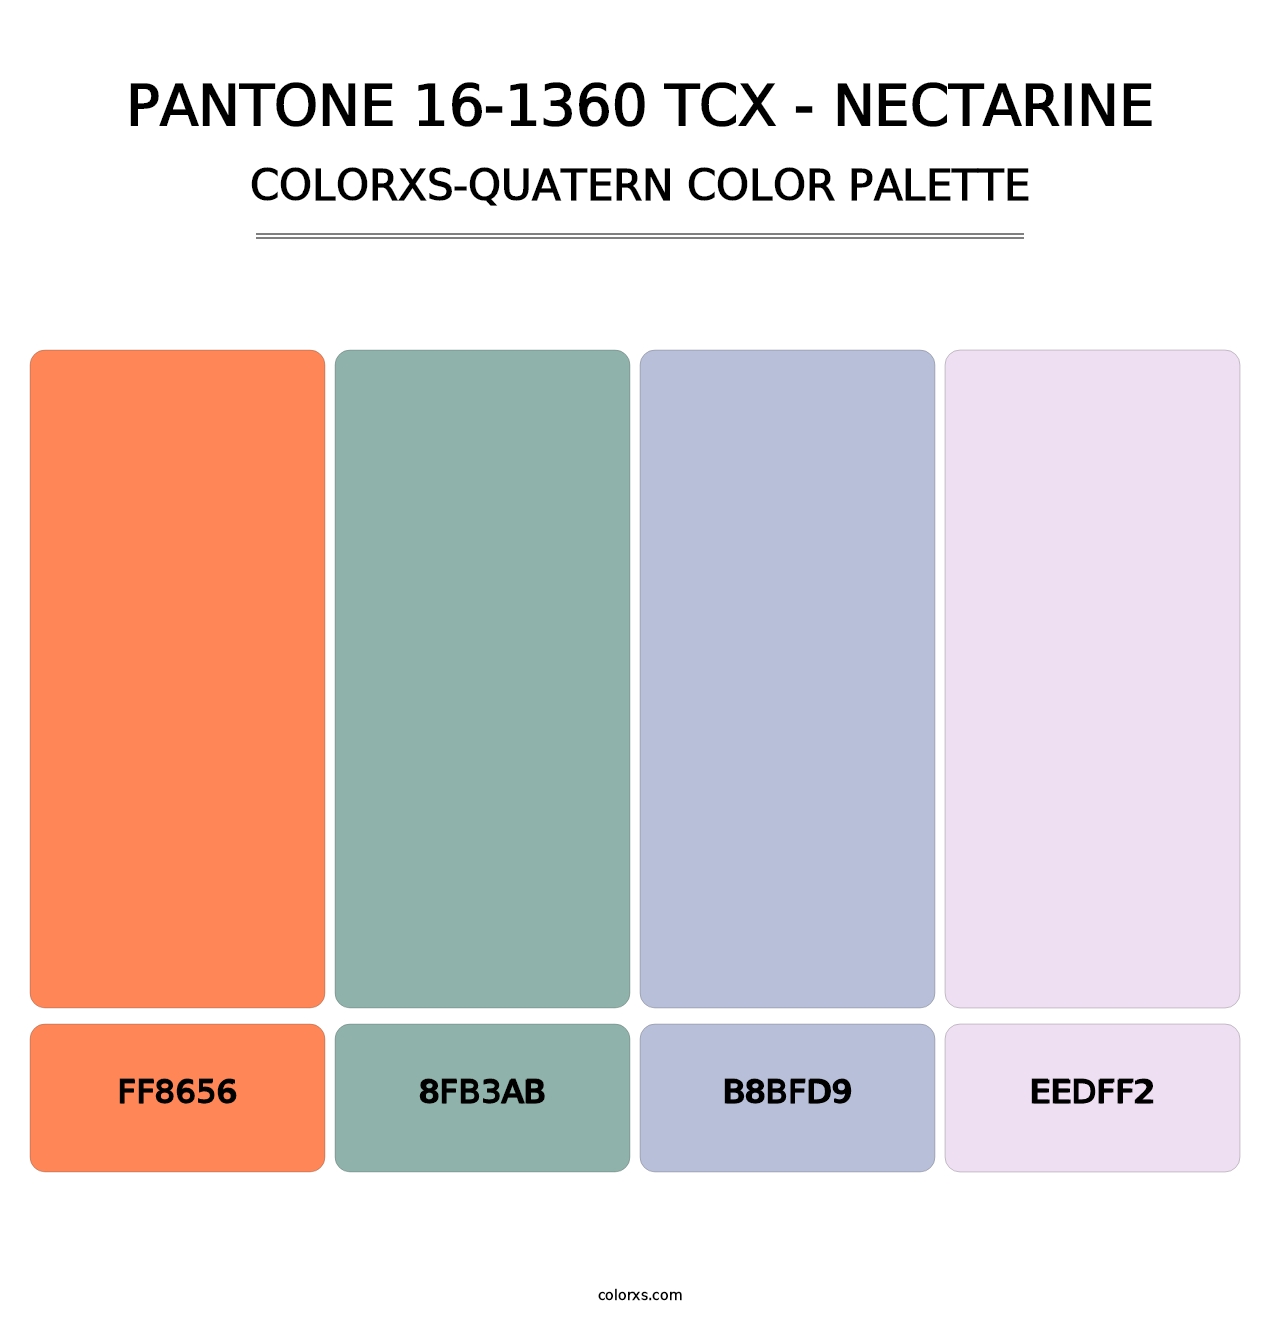 PANTONE 16-1360 TCX - Nectarine - Colorxs Quatern Palette